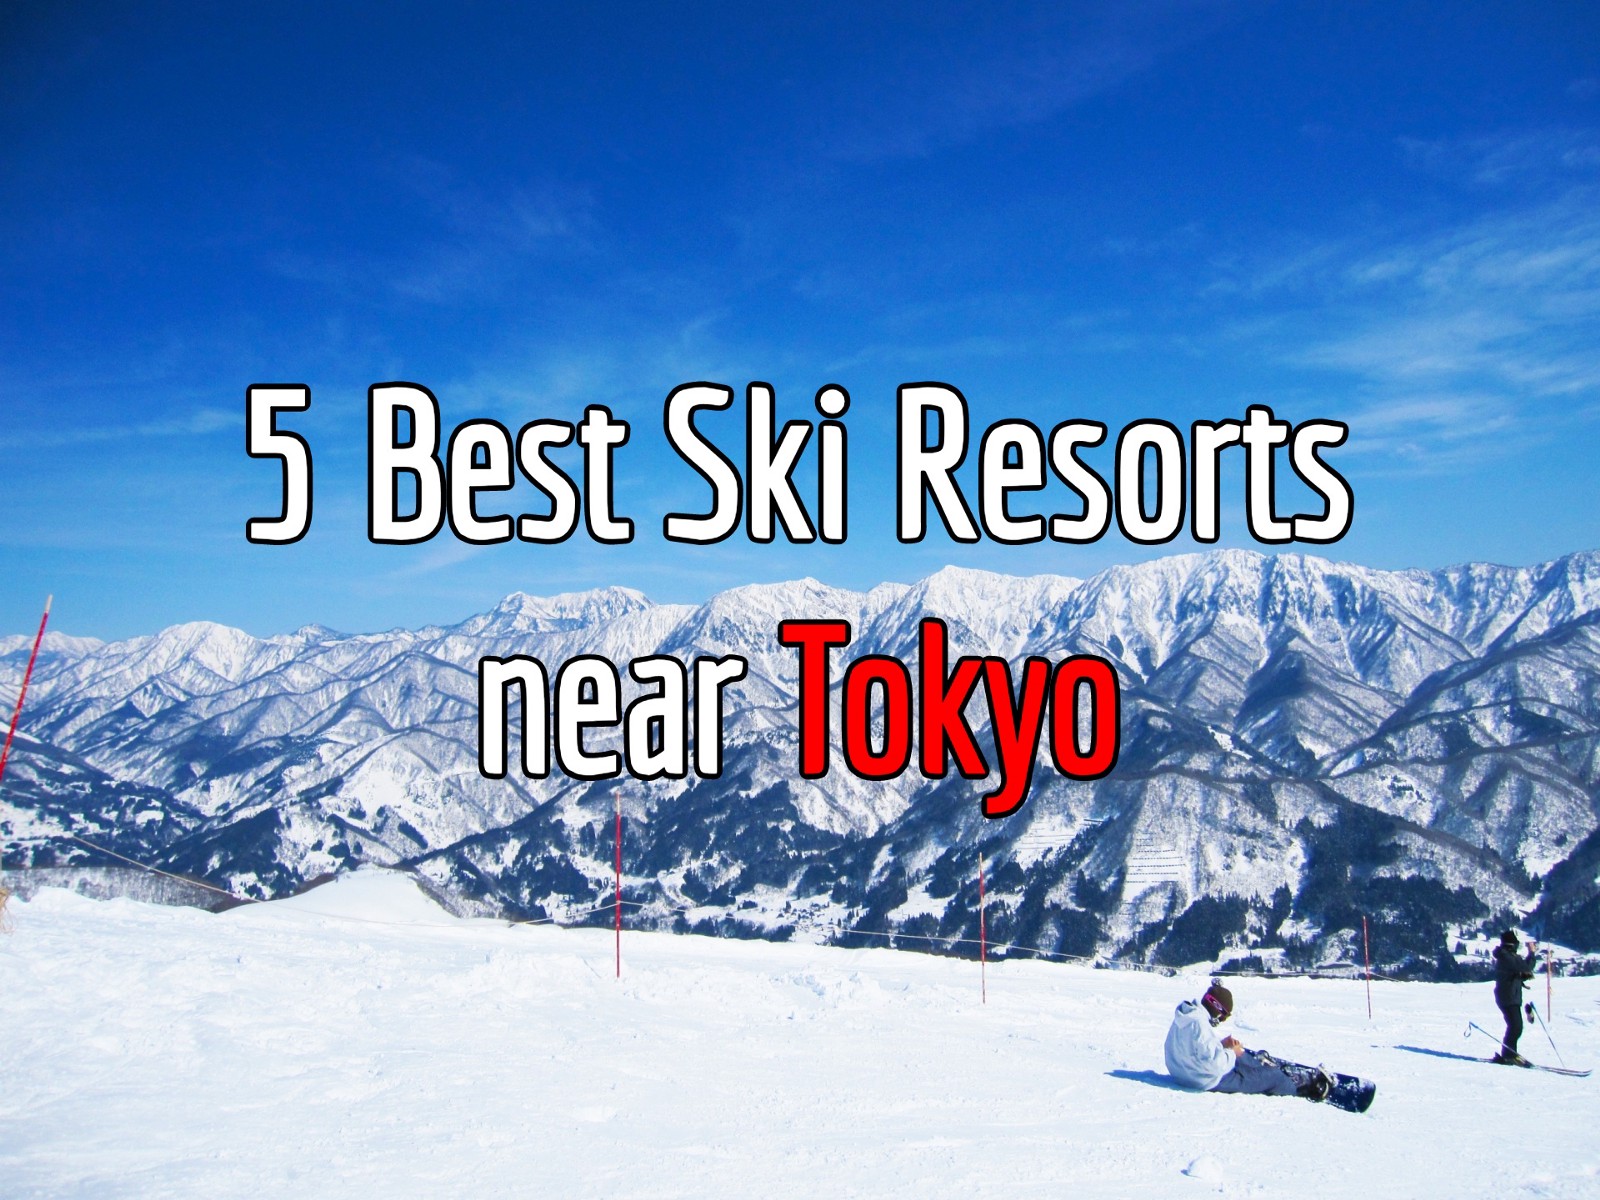 5 Best Ski Resorts near Tokyo 2019-2020